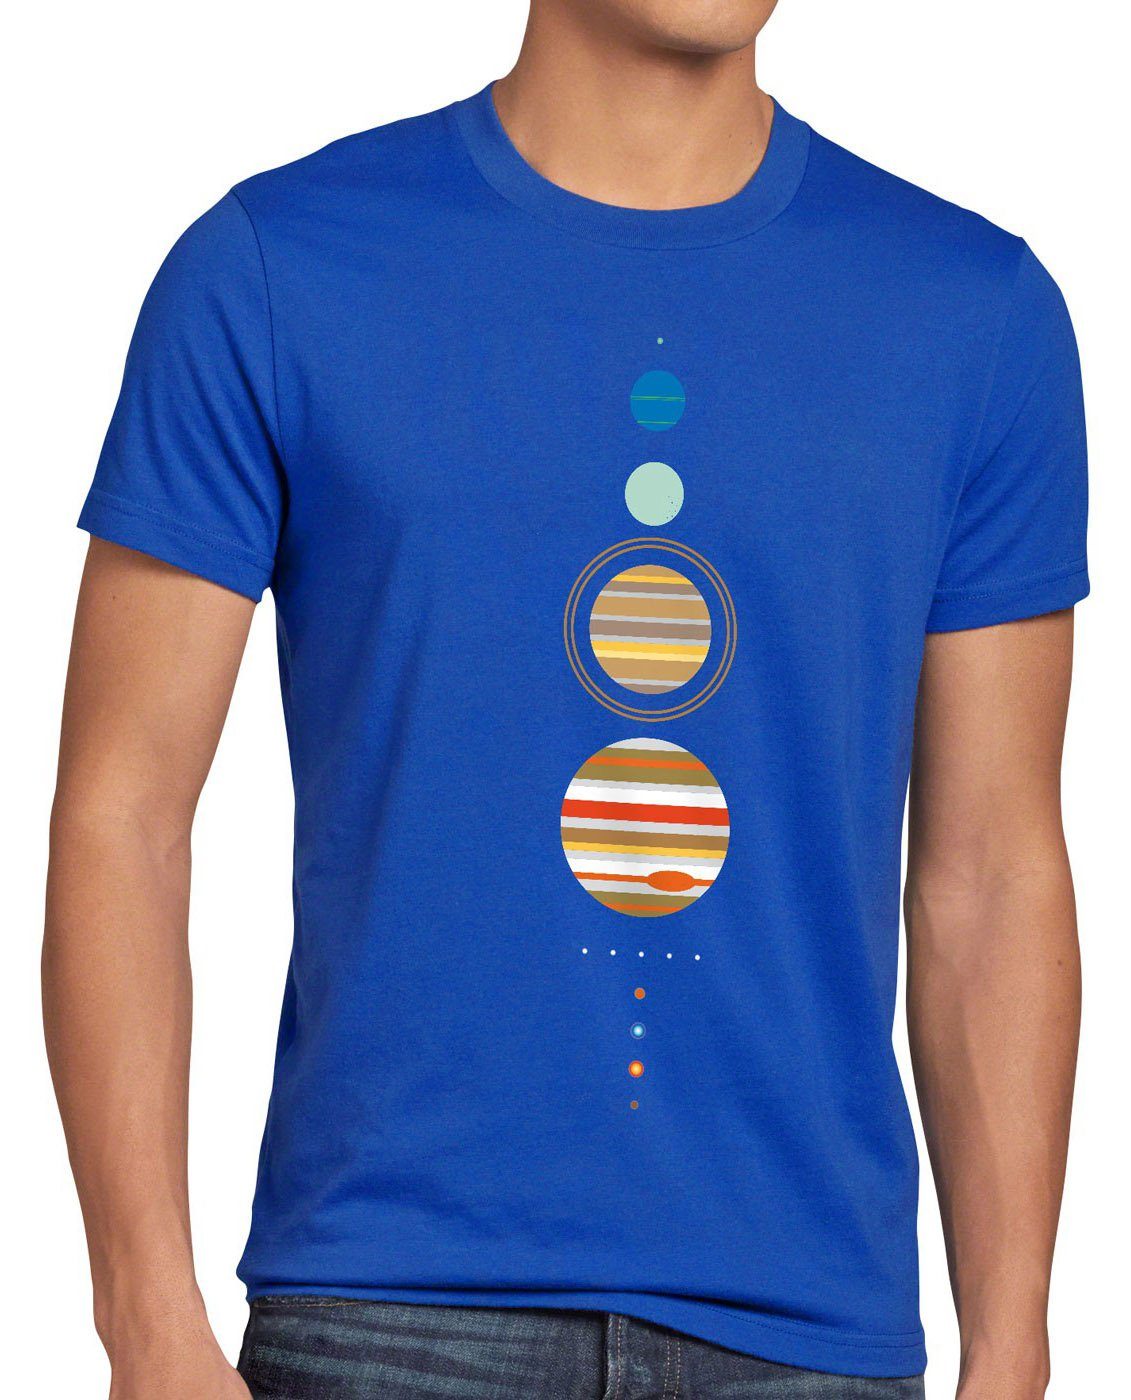 style3 cooper Sheldon blau Print-Shirt erde Herren planeten bang T-Shirt big theory system Sonnensystem